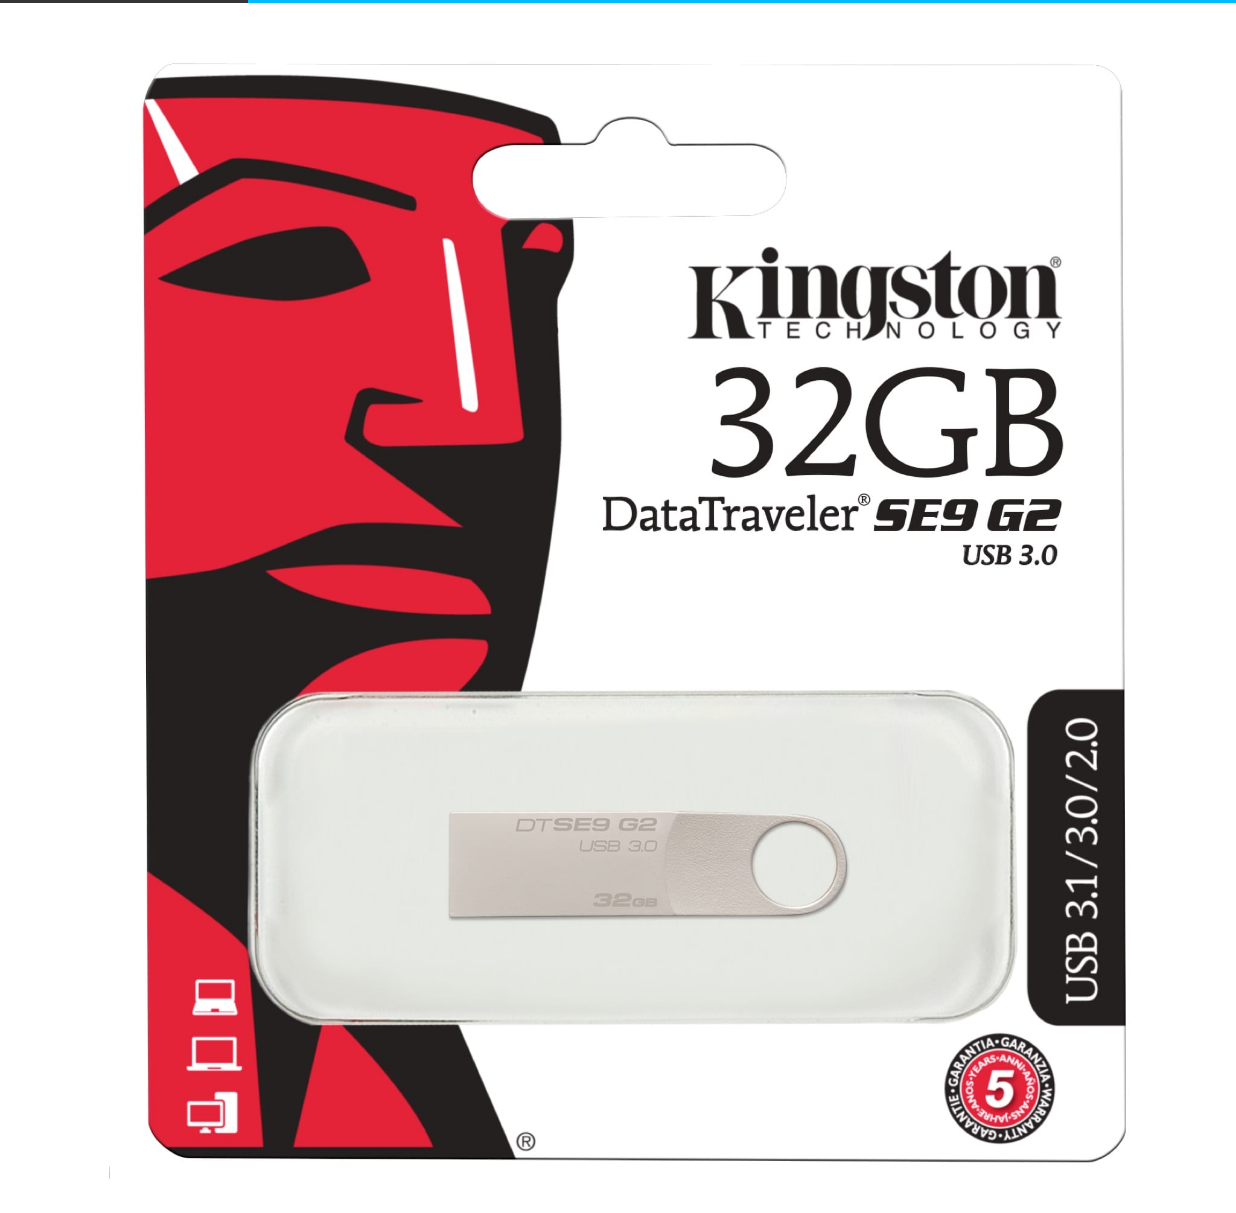 2 To : Kingston bat un record de stockage avec sa clé USB